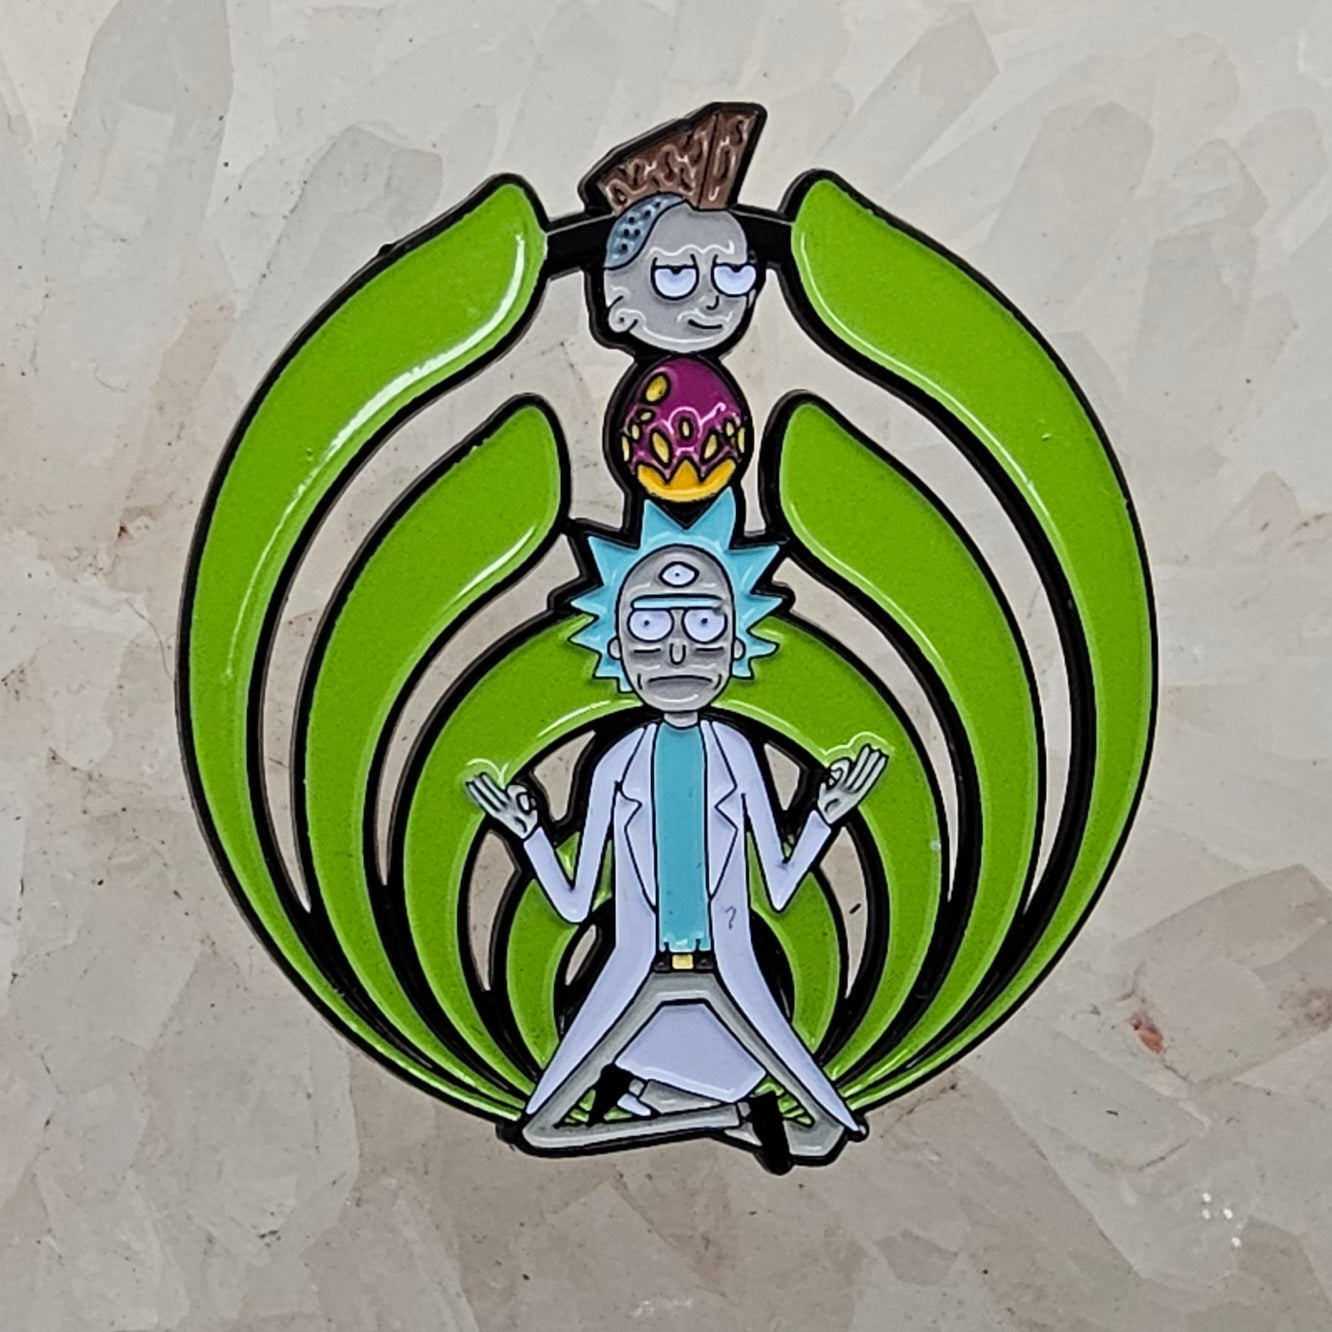 Rick Meditation Morty Bass Buddha Cartoon Edm Dj Dubstep Green Enamel Pins Hat Pins Lapel Pin Brooch Badge Festival Pin